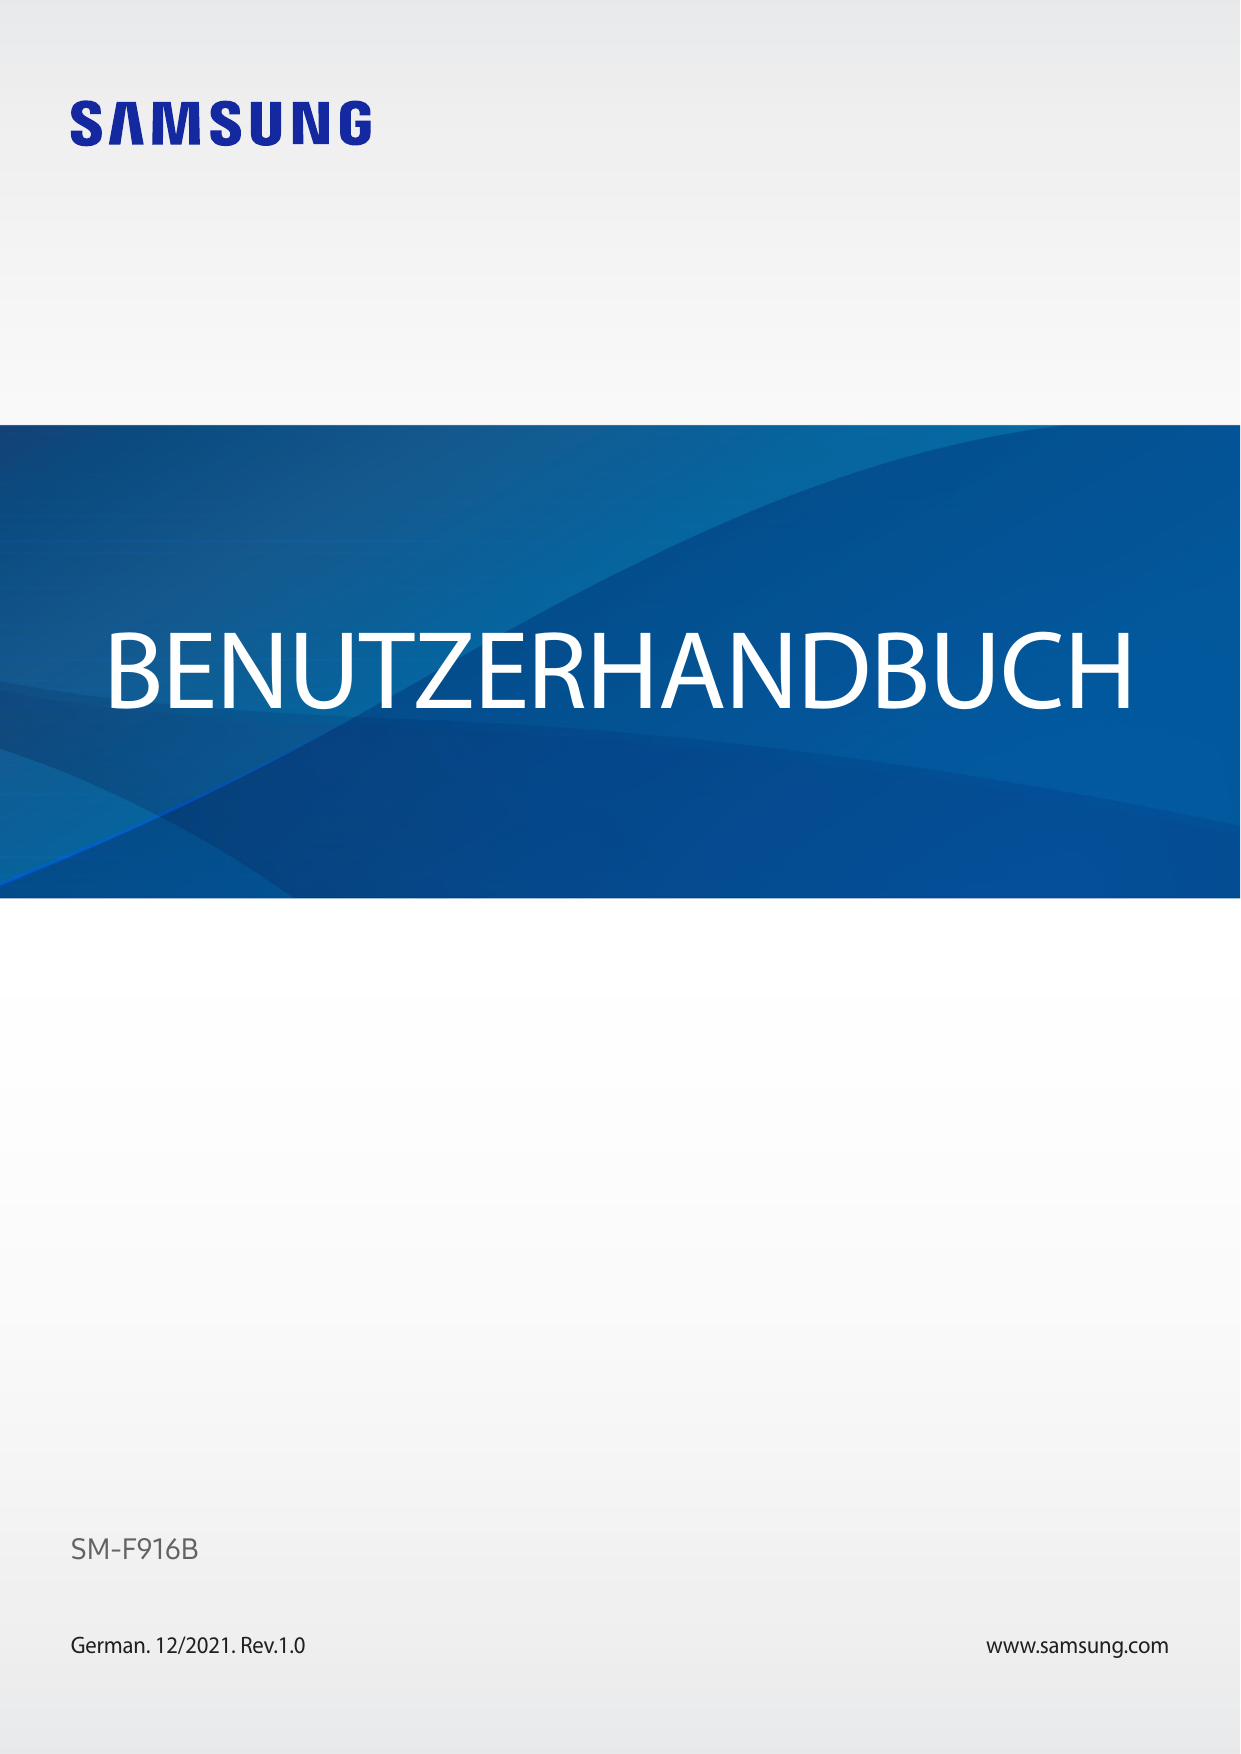 BENUTZERHANDBUCHSM-F916BGerman. 12/2021. Rev.1.0www.samsung.com